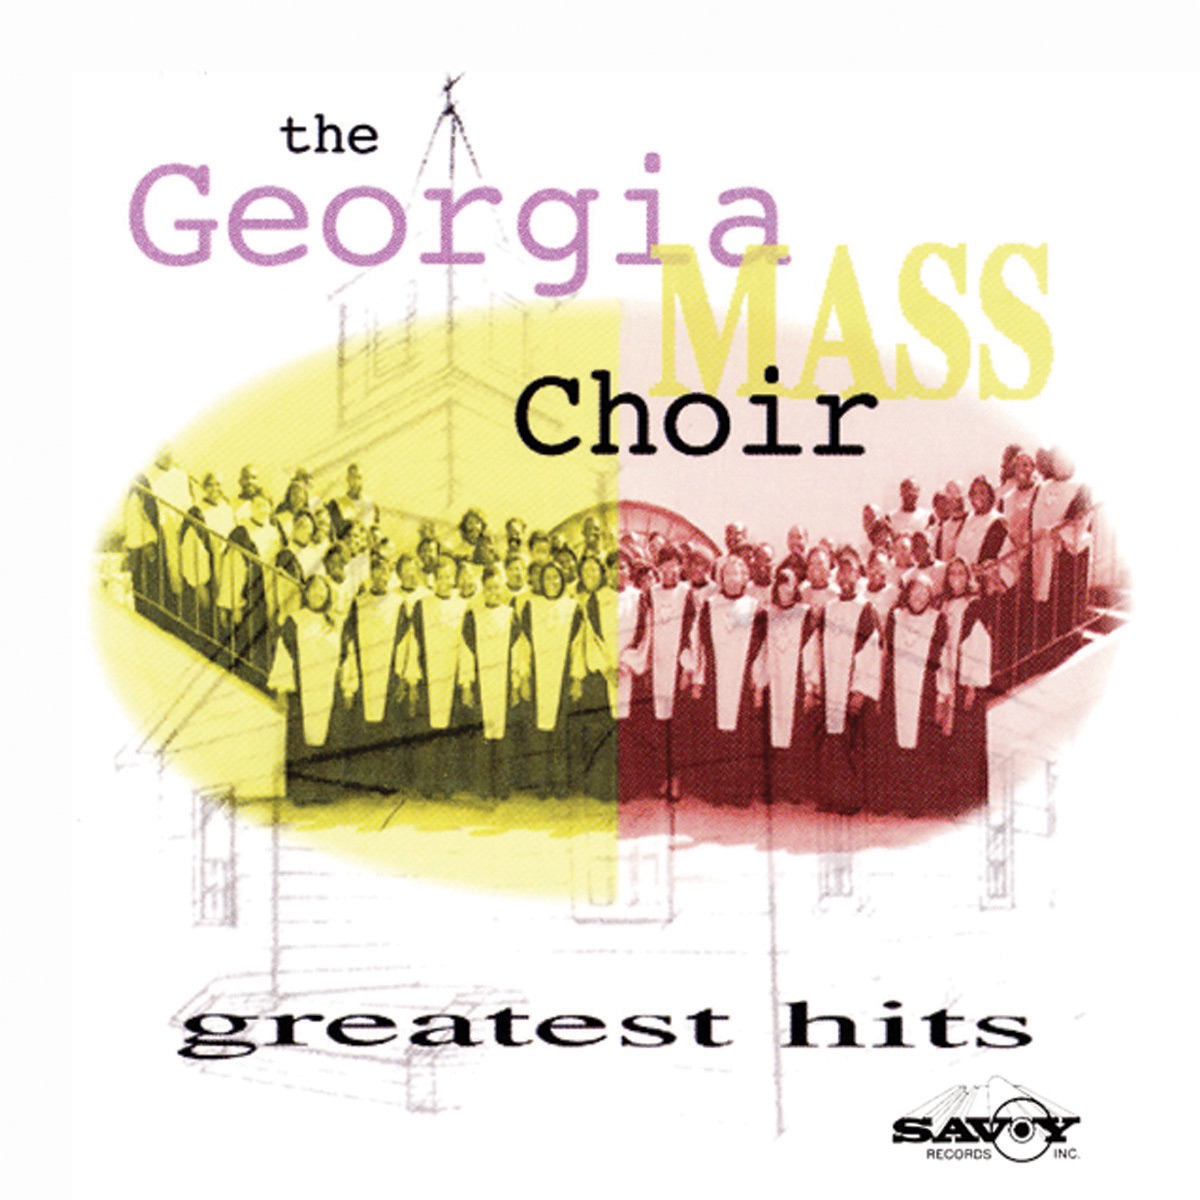 They That Wait - Album by The Georgia Mass Choir - Apple Music